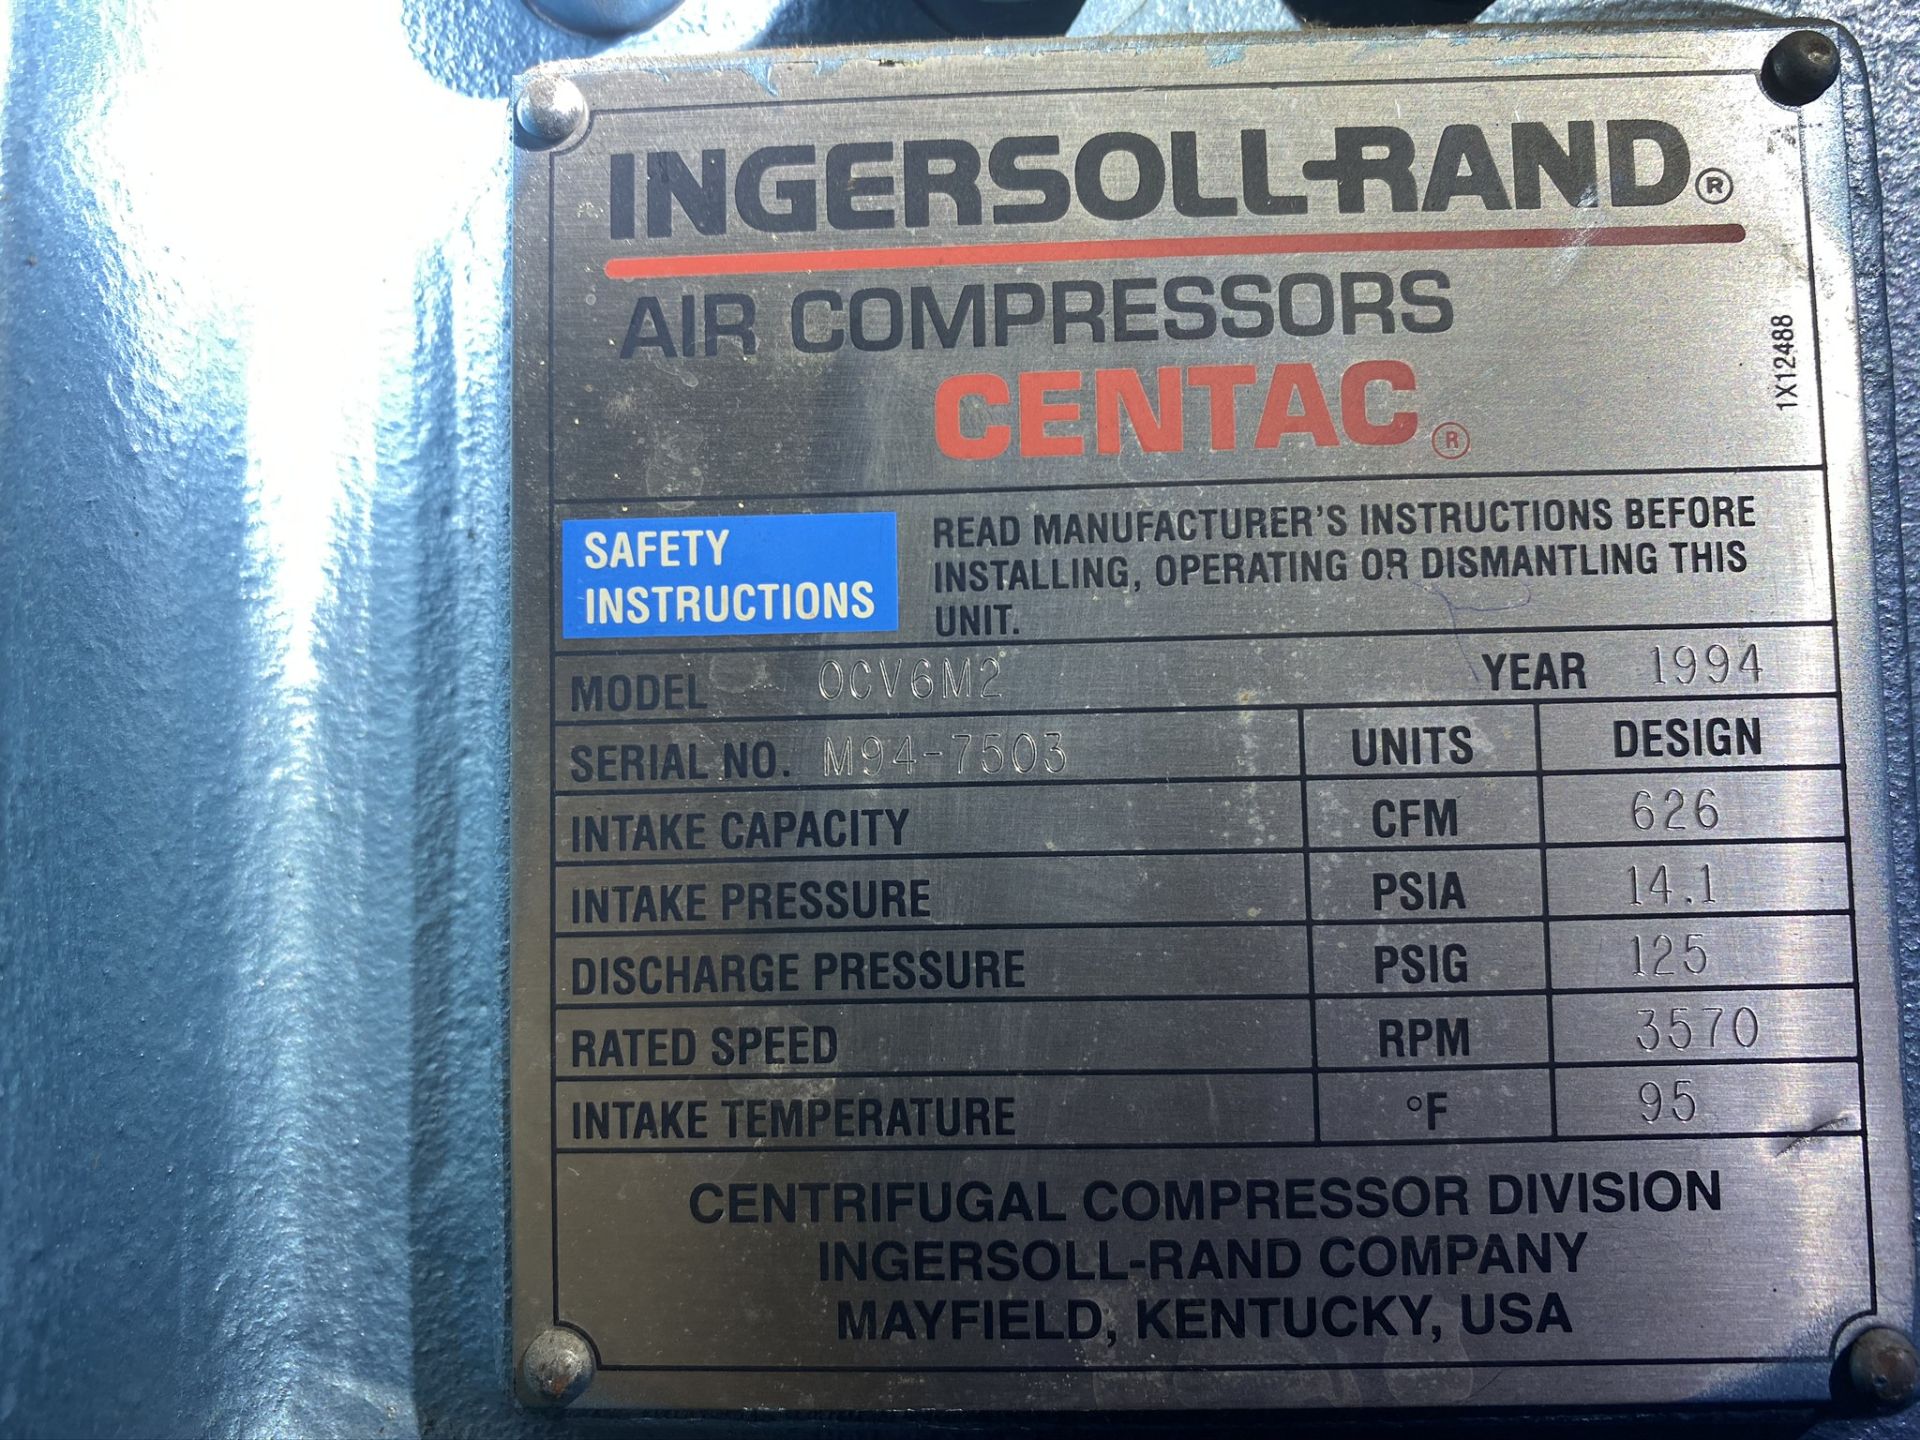 Ingersoll Rand air compressor. Model OCV6M2. 175HP, S/N M94-7503. 1994. Intake Capacity 626 CFM. - Image 6 of 6